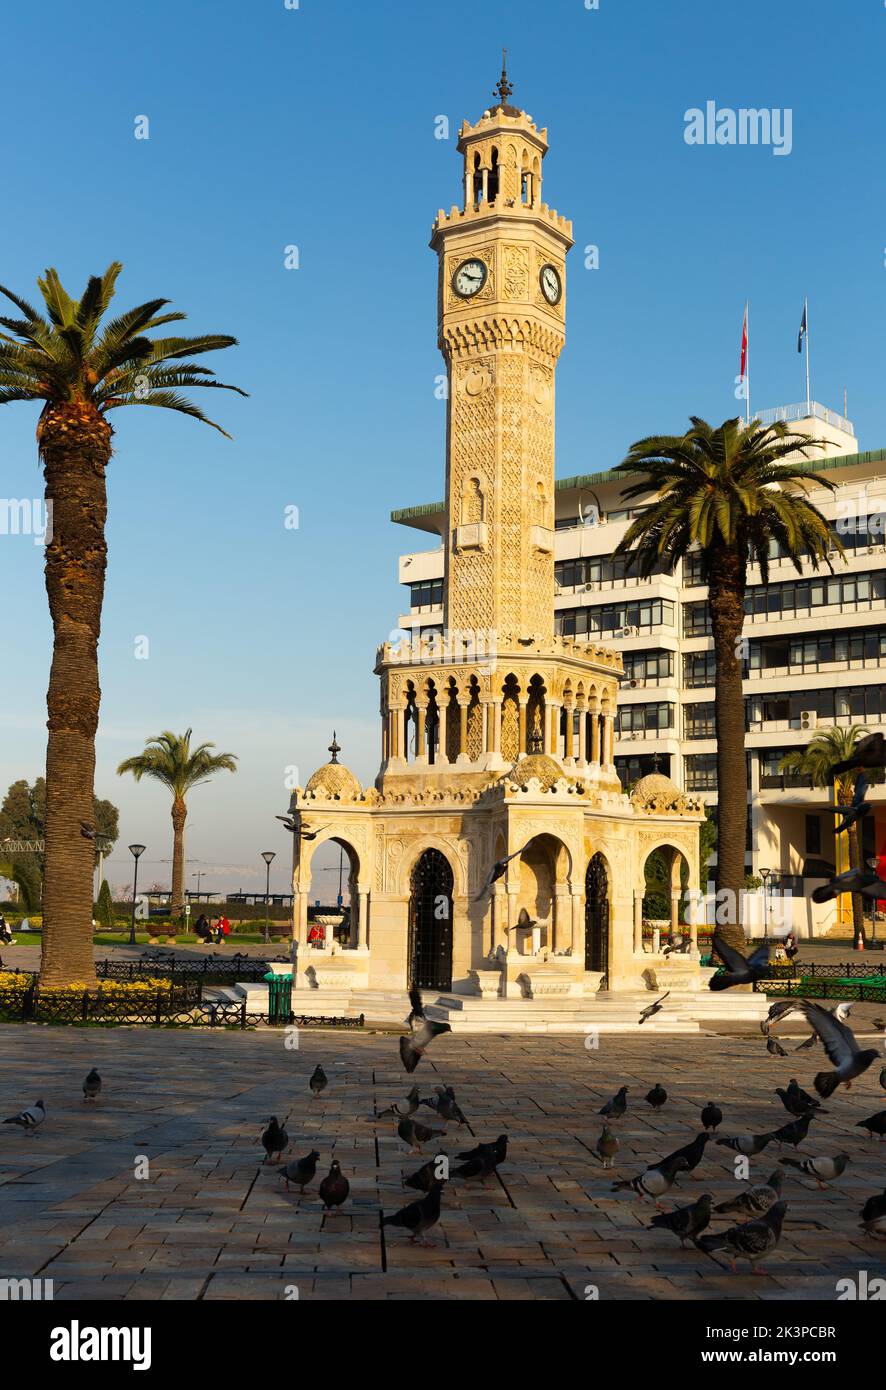 Izmir, Türkei - 04. Januar 2021: Architektonisches Detail des Saat Kulesi (Uhrenturm) auf dem Konak Meydani (Konak-Platz). Türkei Stockfoto